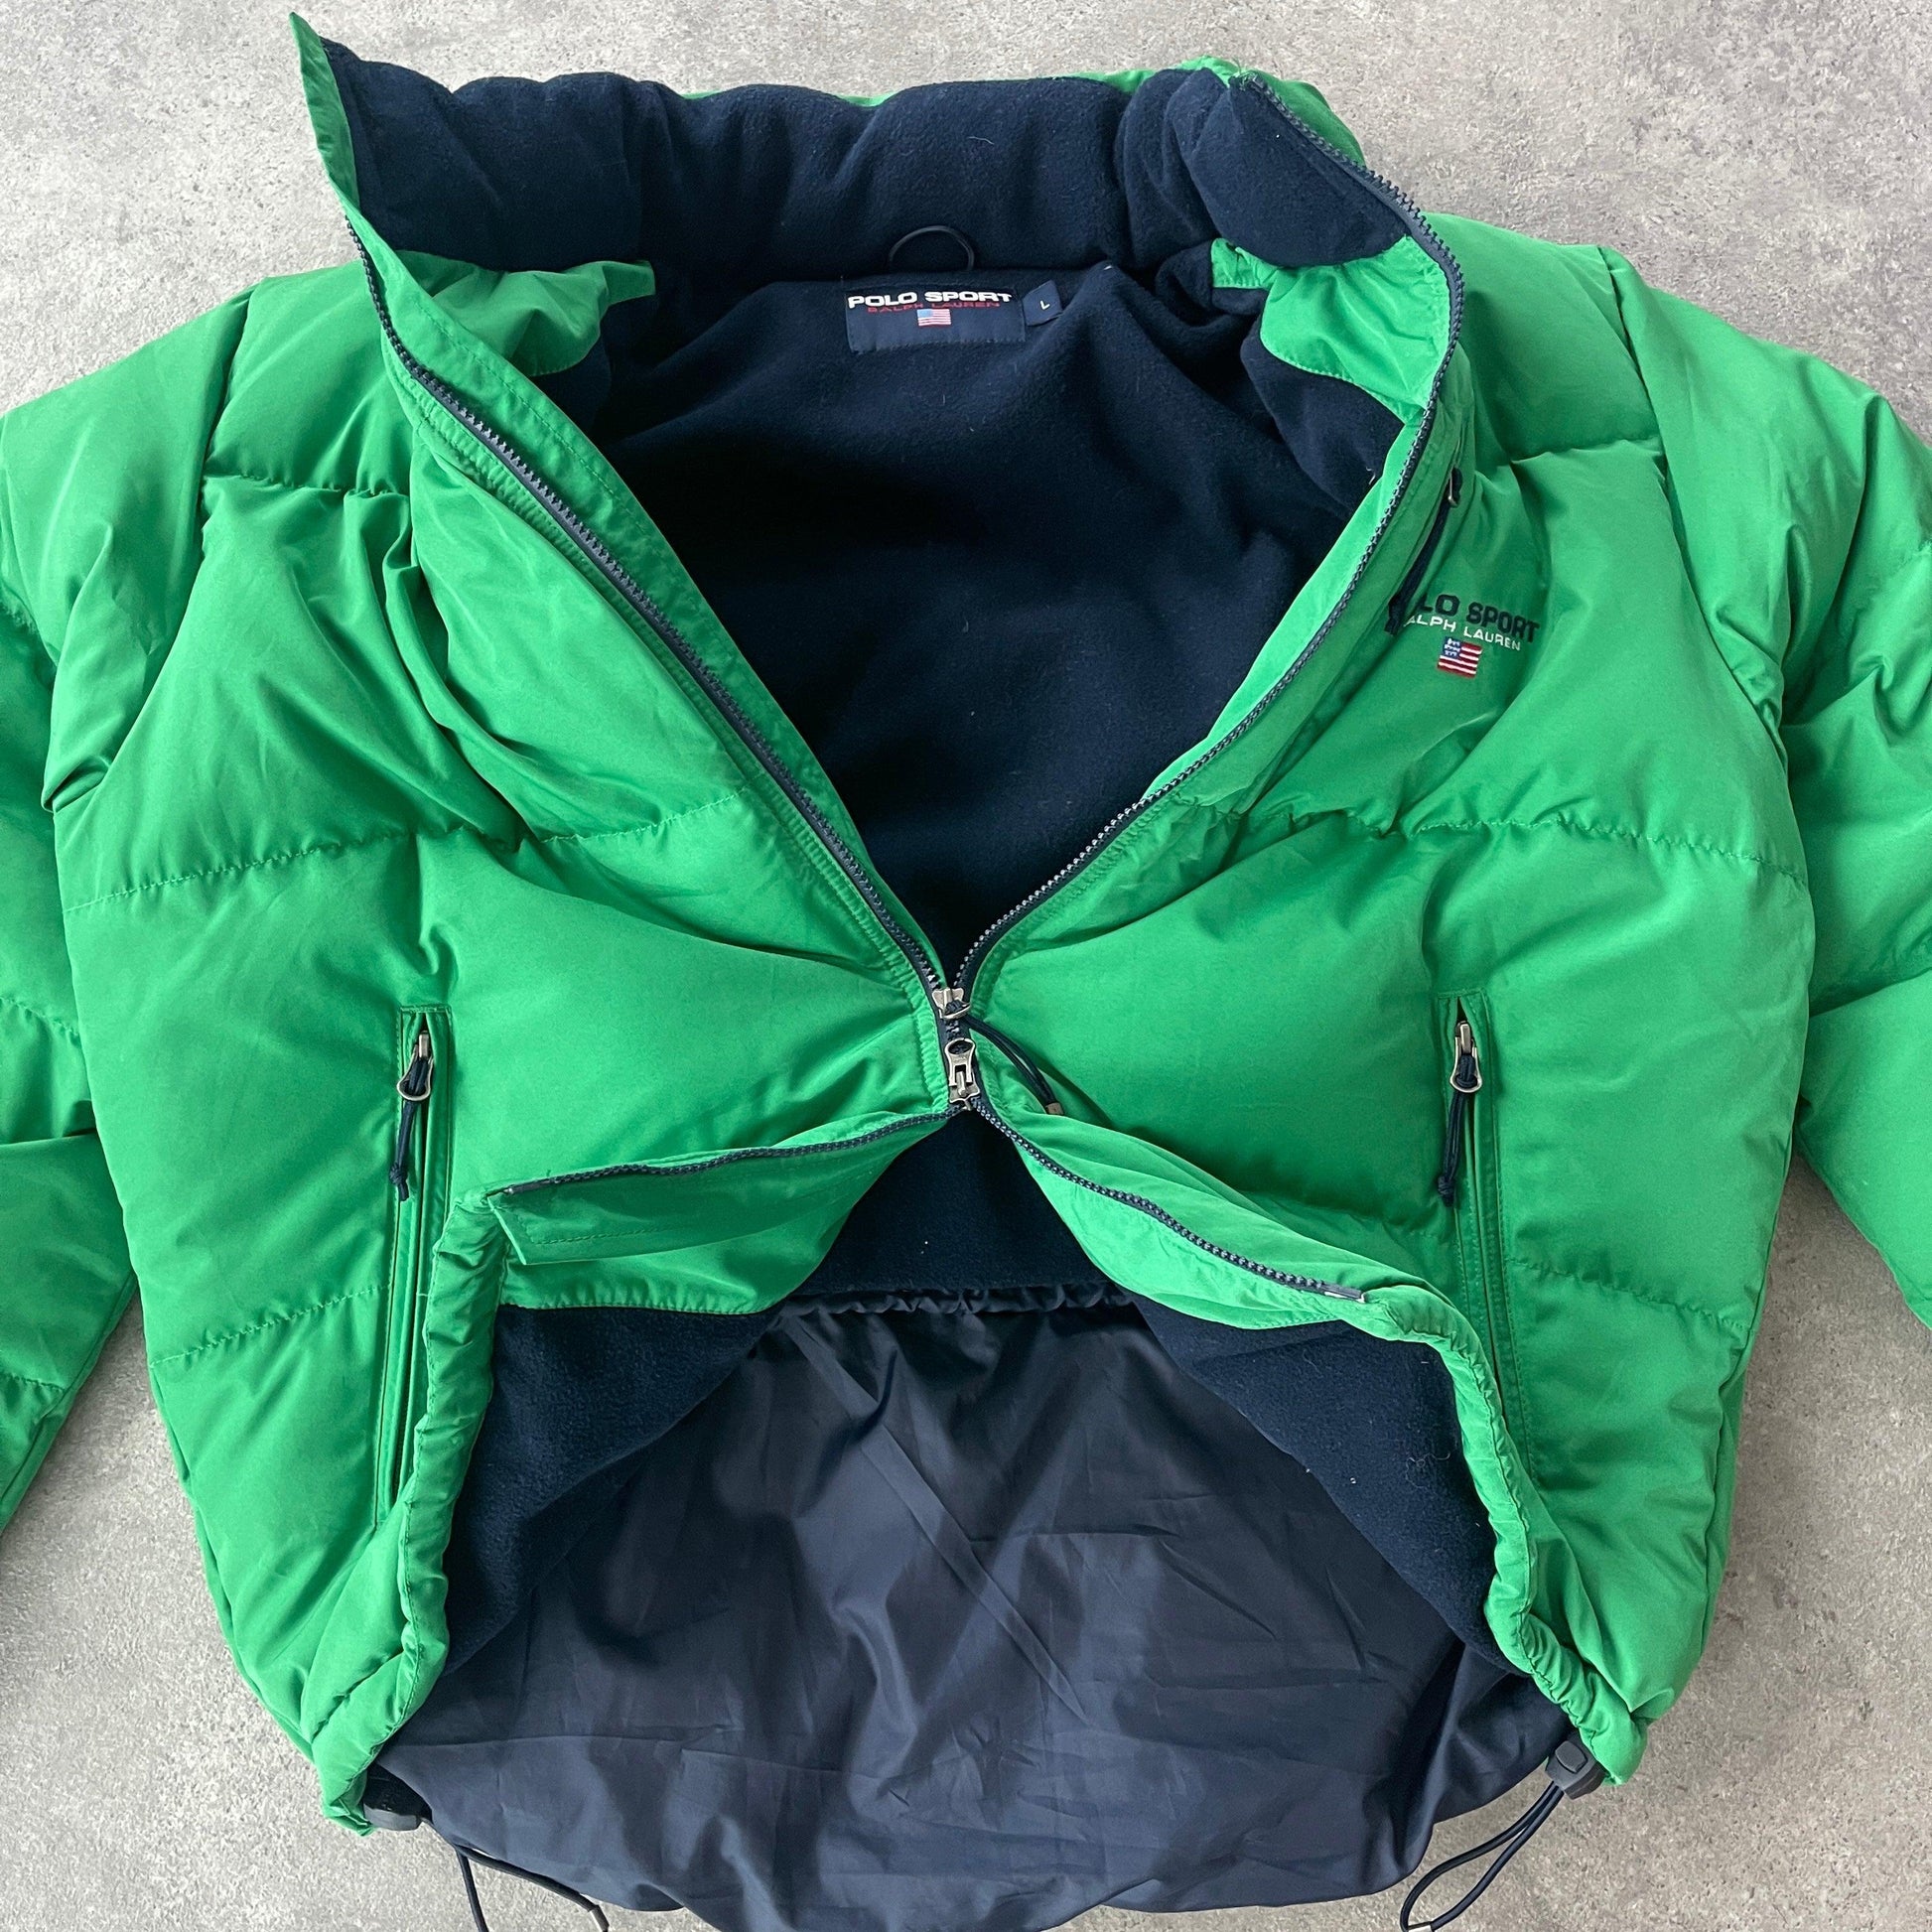 Polo Sport Ralph Lauren 1990s technical fleece lined puffer jacket (L) - Known Source